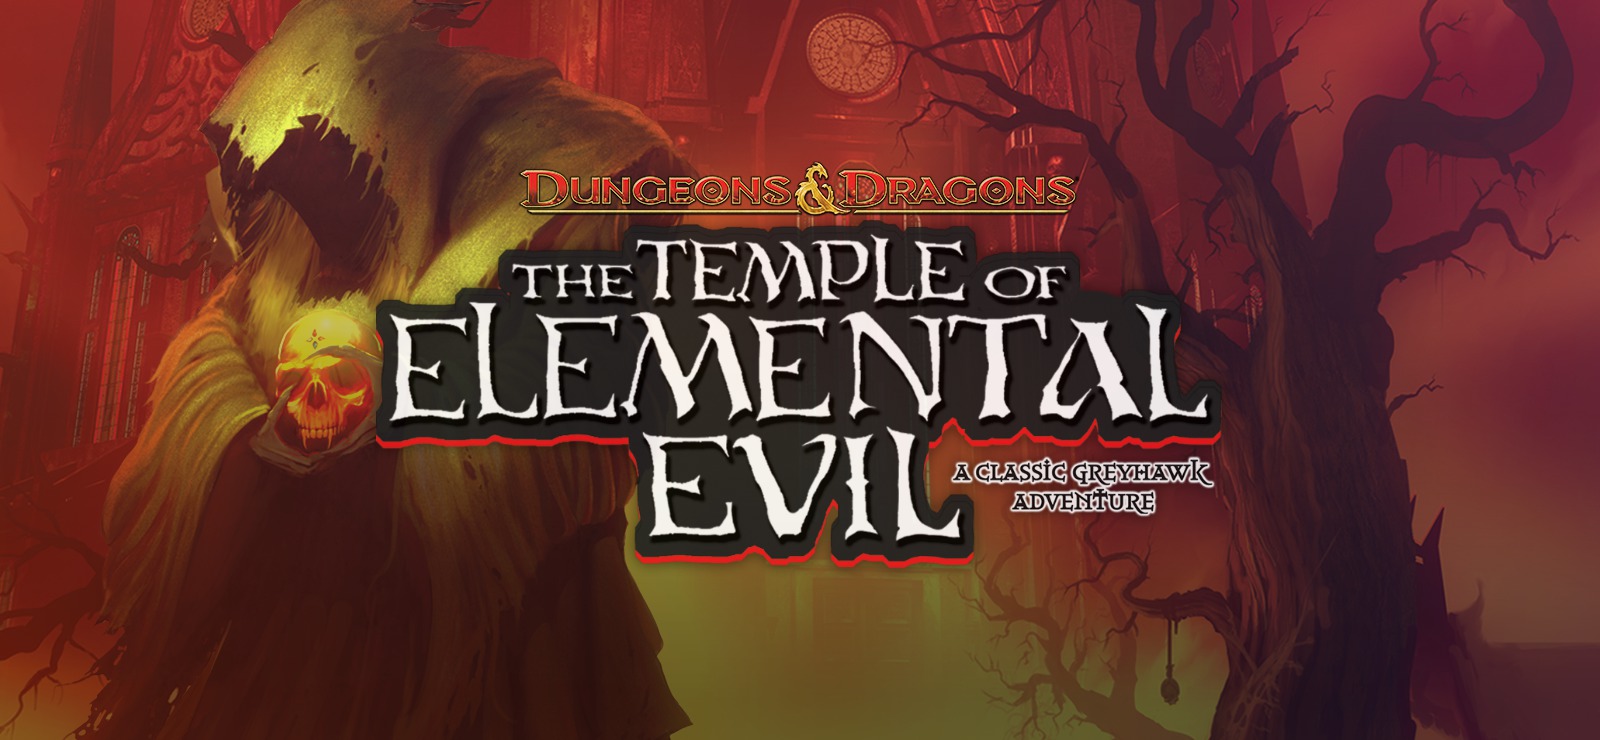 Temple Of Elemental Evil HD wallpapers, Desktop wallpaper - most viewed